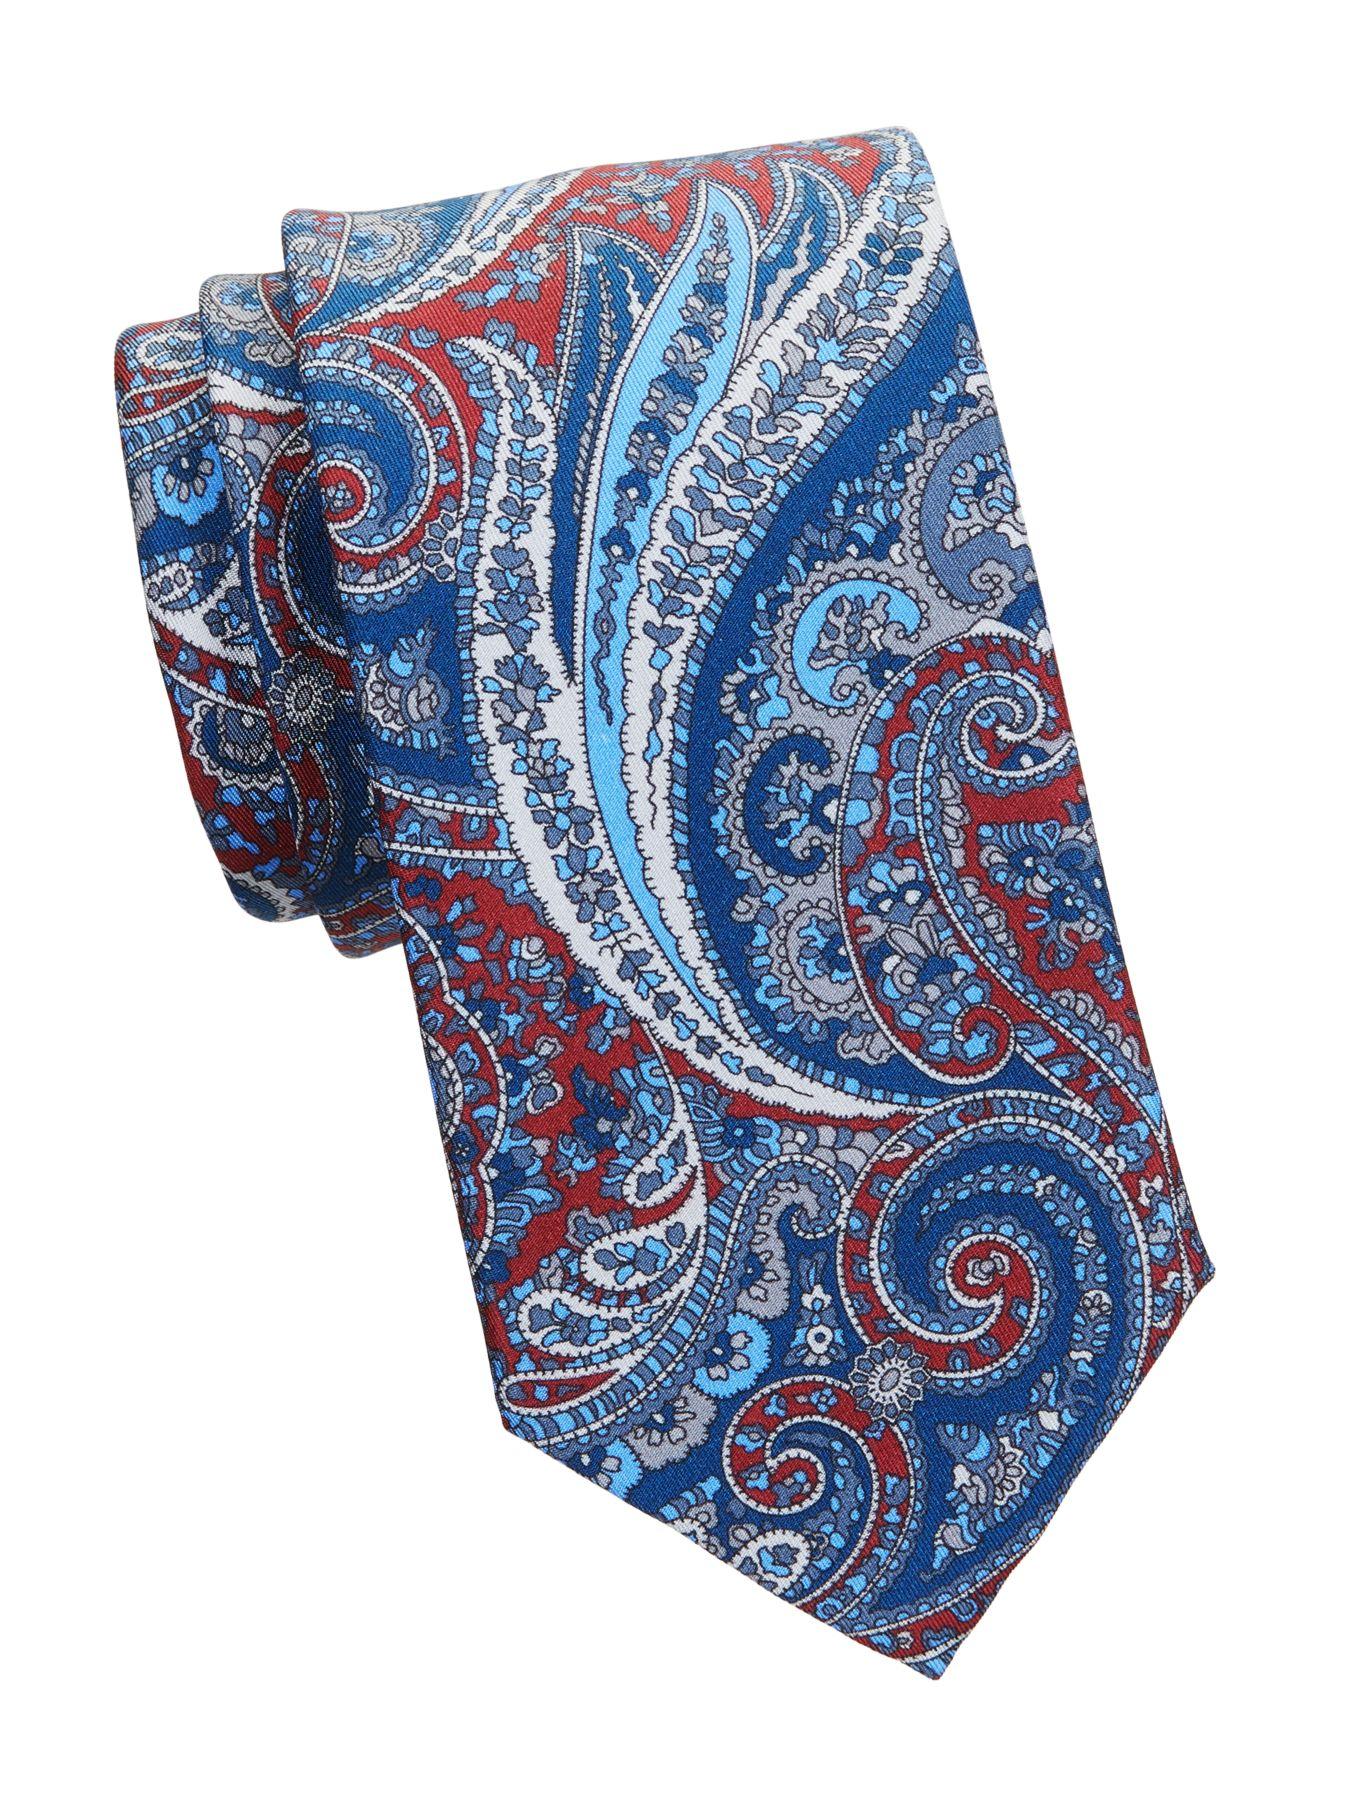 Brioni Paisley Silk Tie in Dark Red Blue (Blue) for Men - Lyst